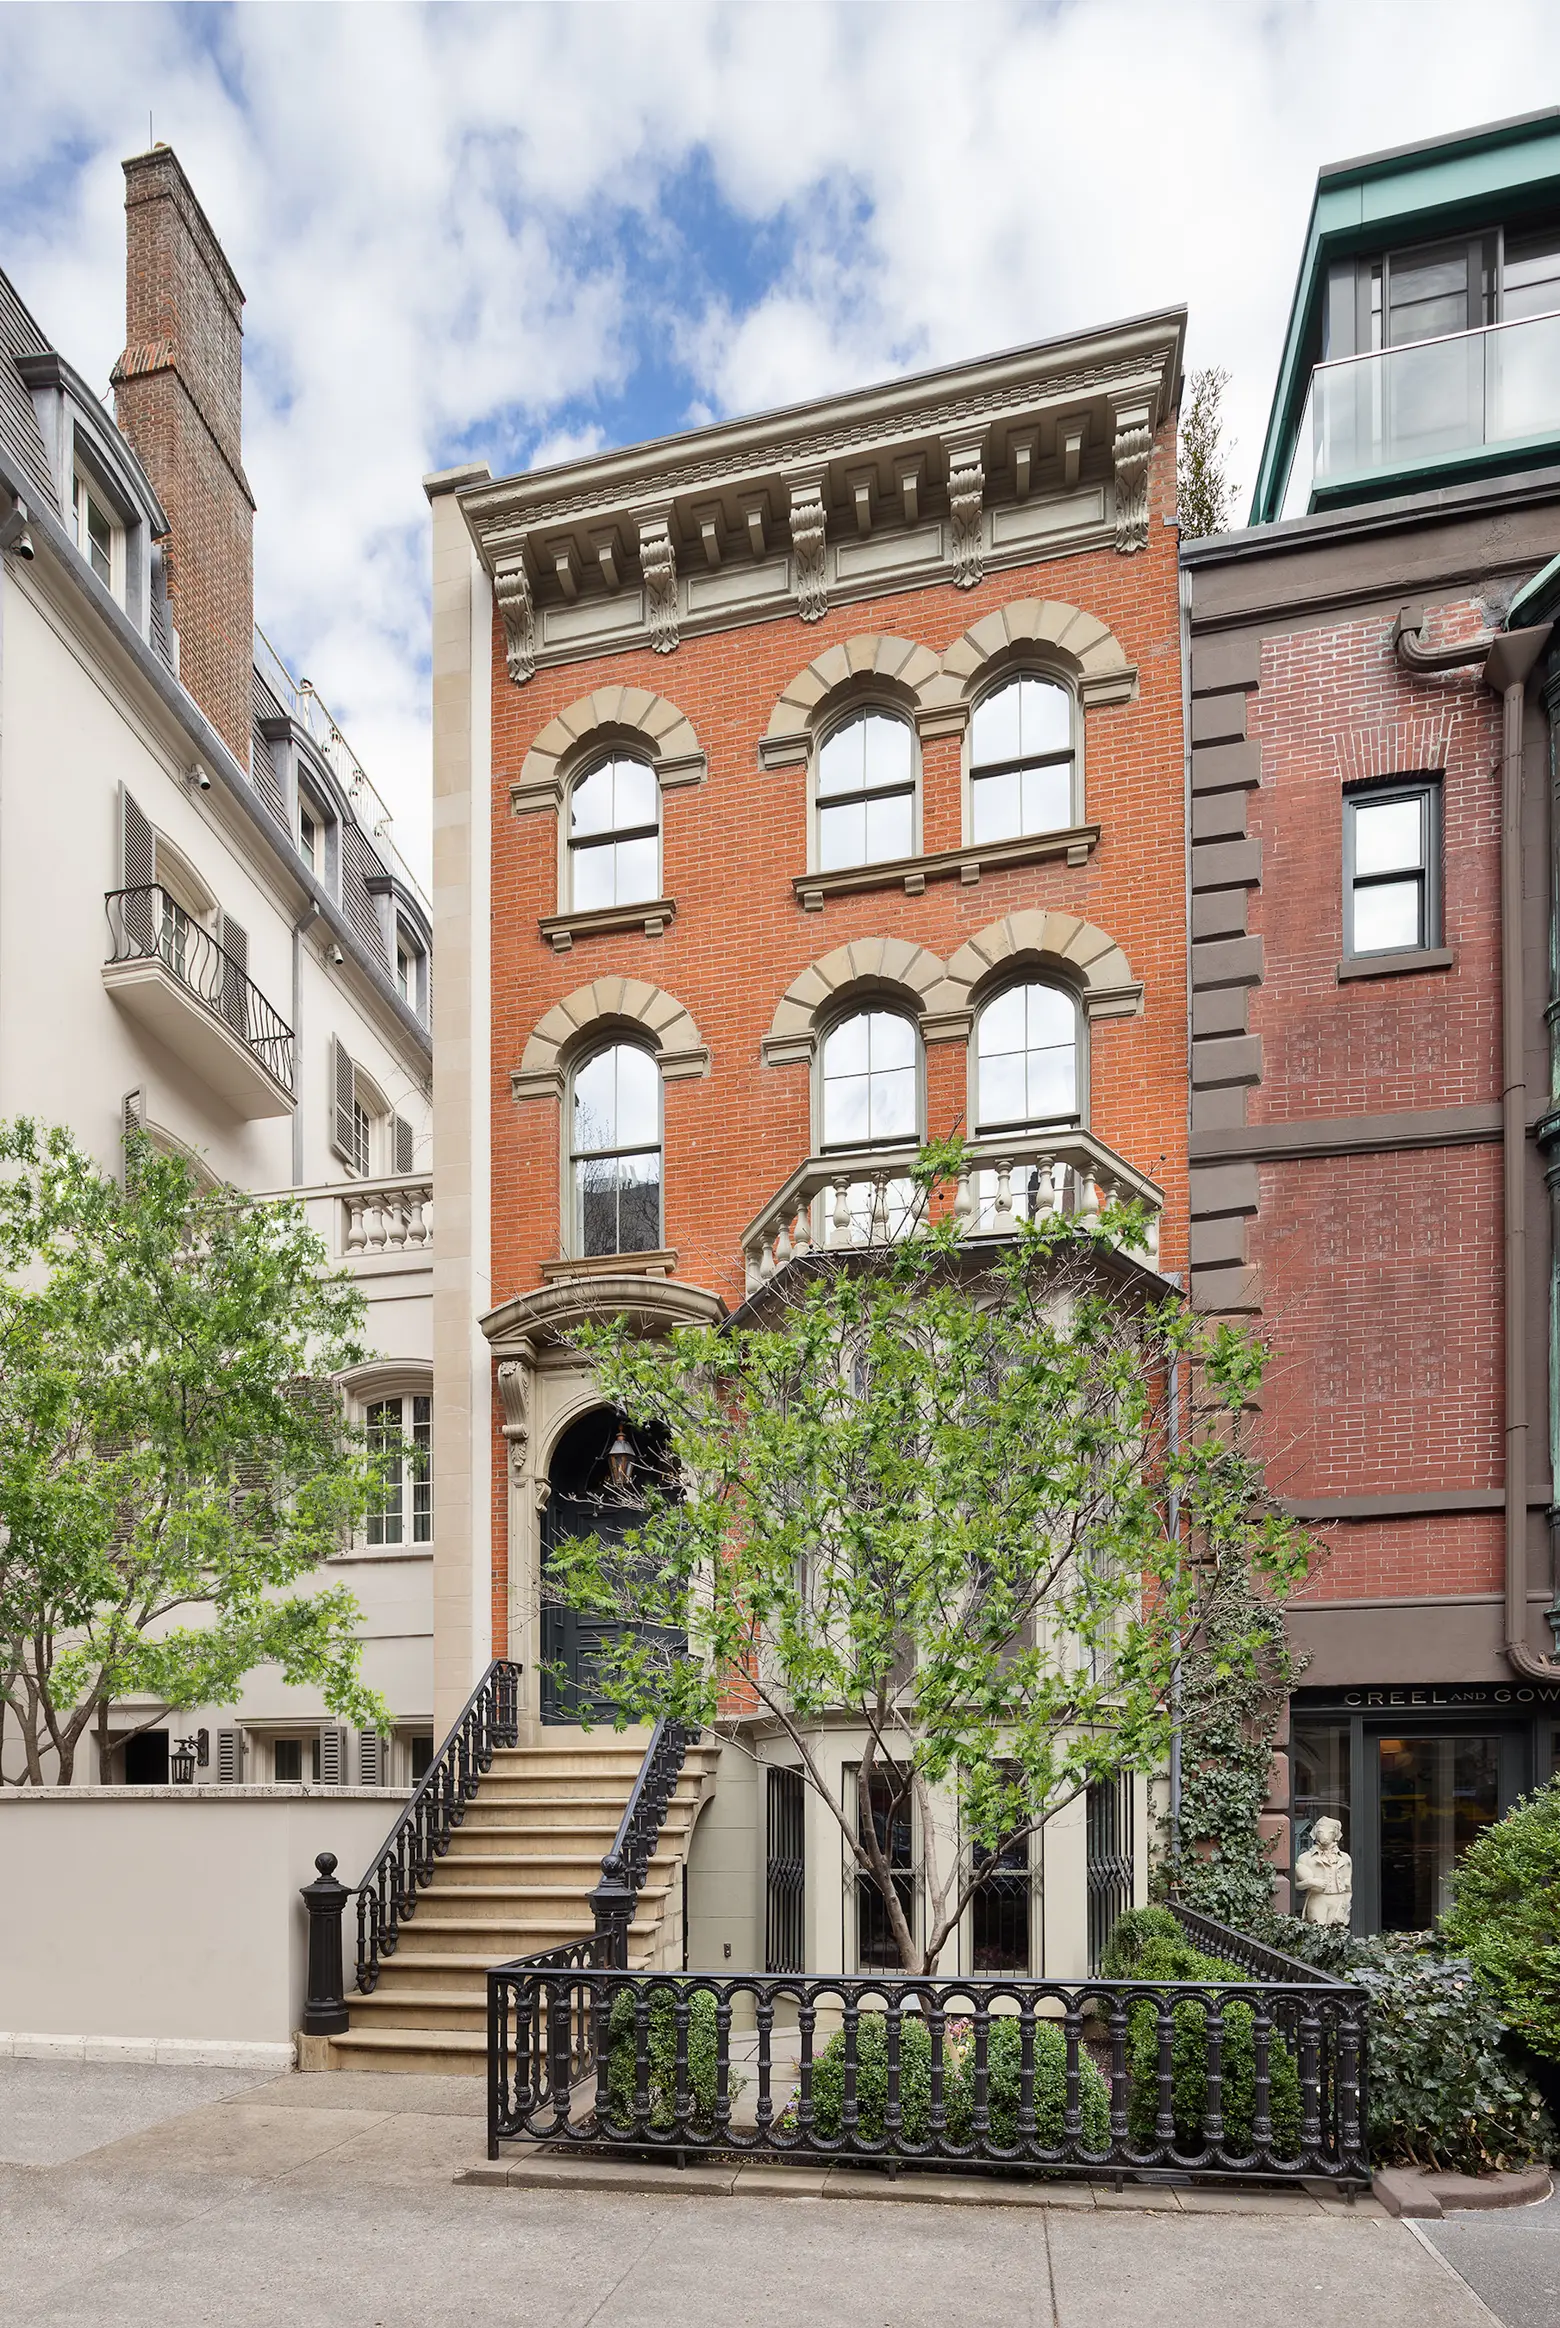 The Upper East Side historic district's oldest home asks $13.9M